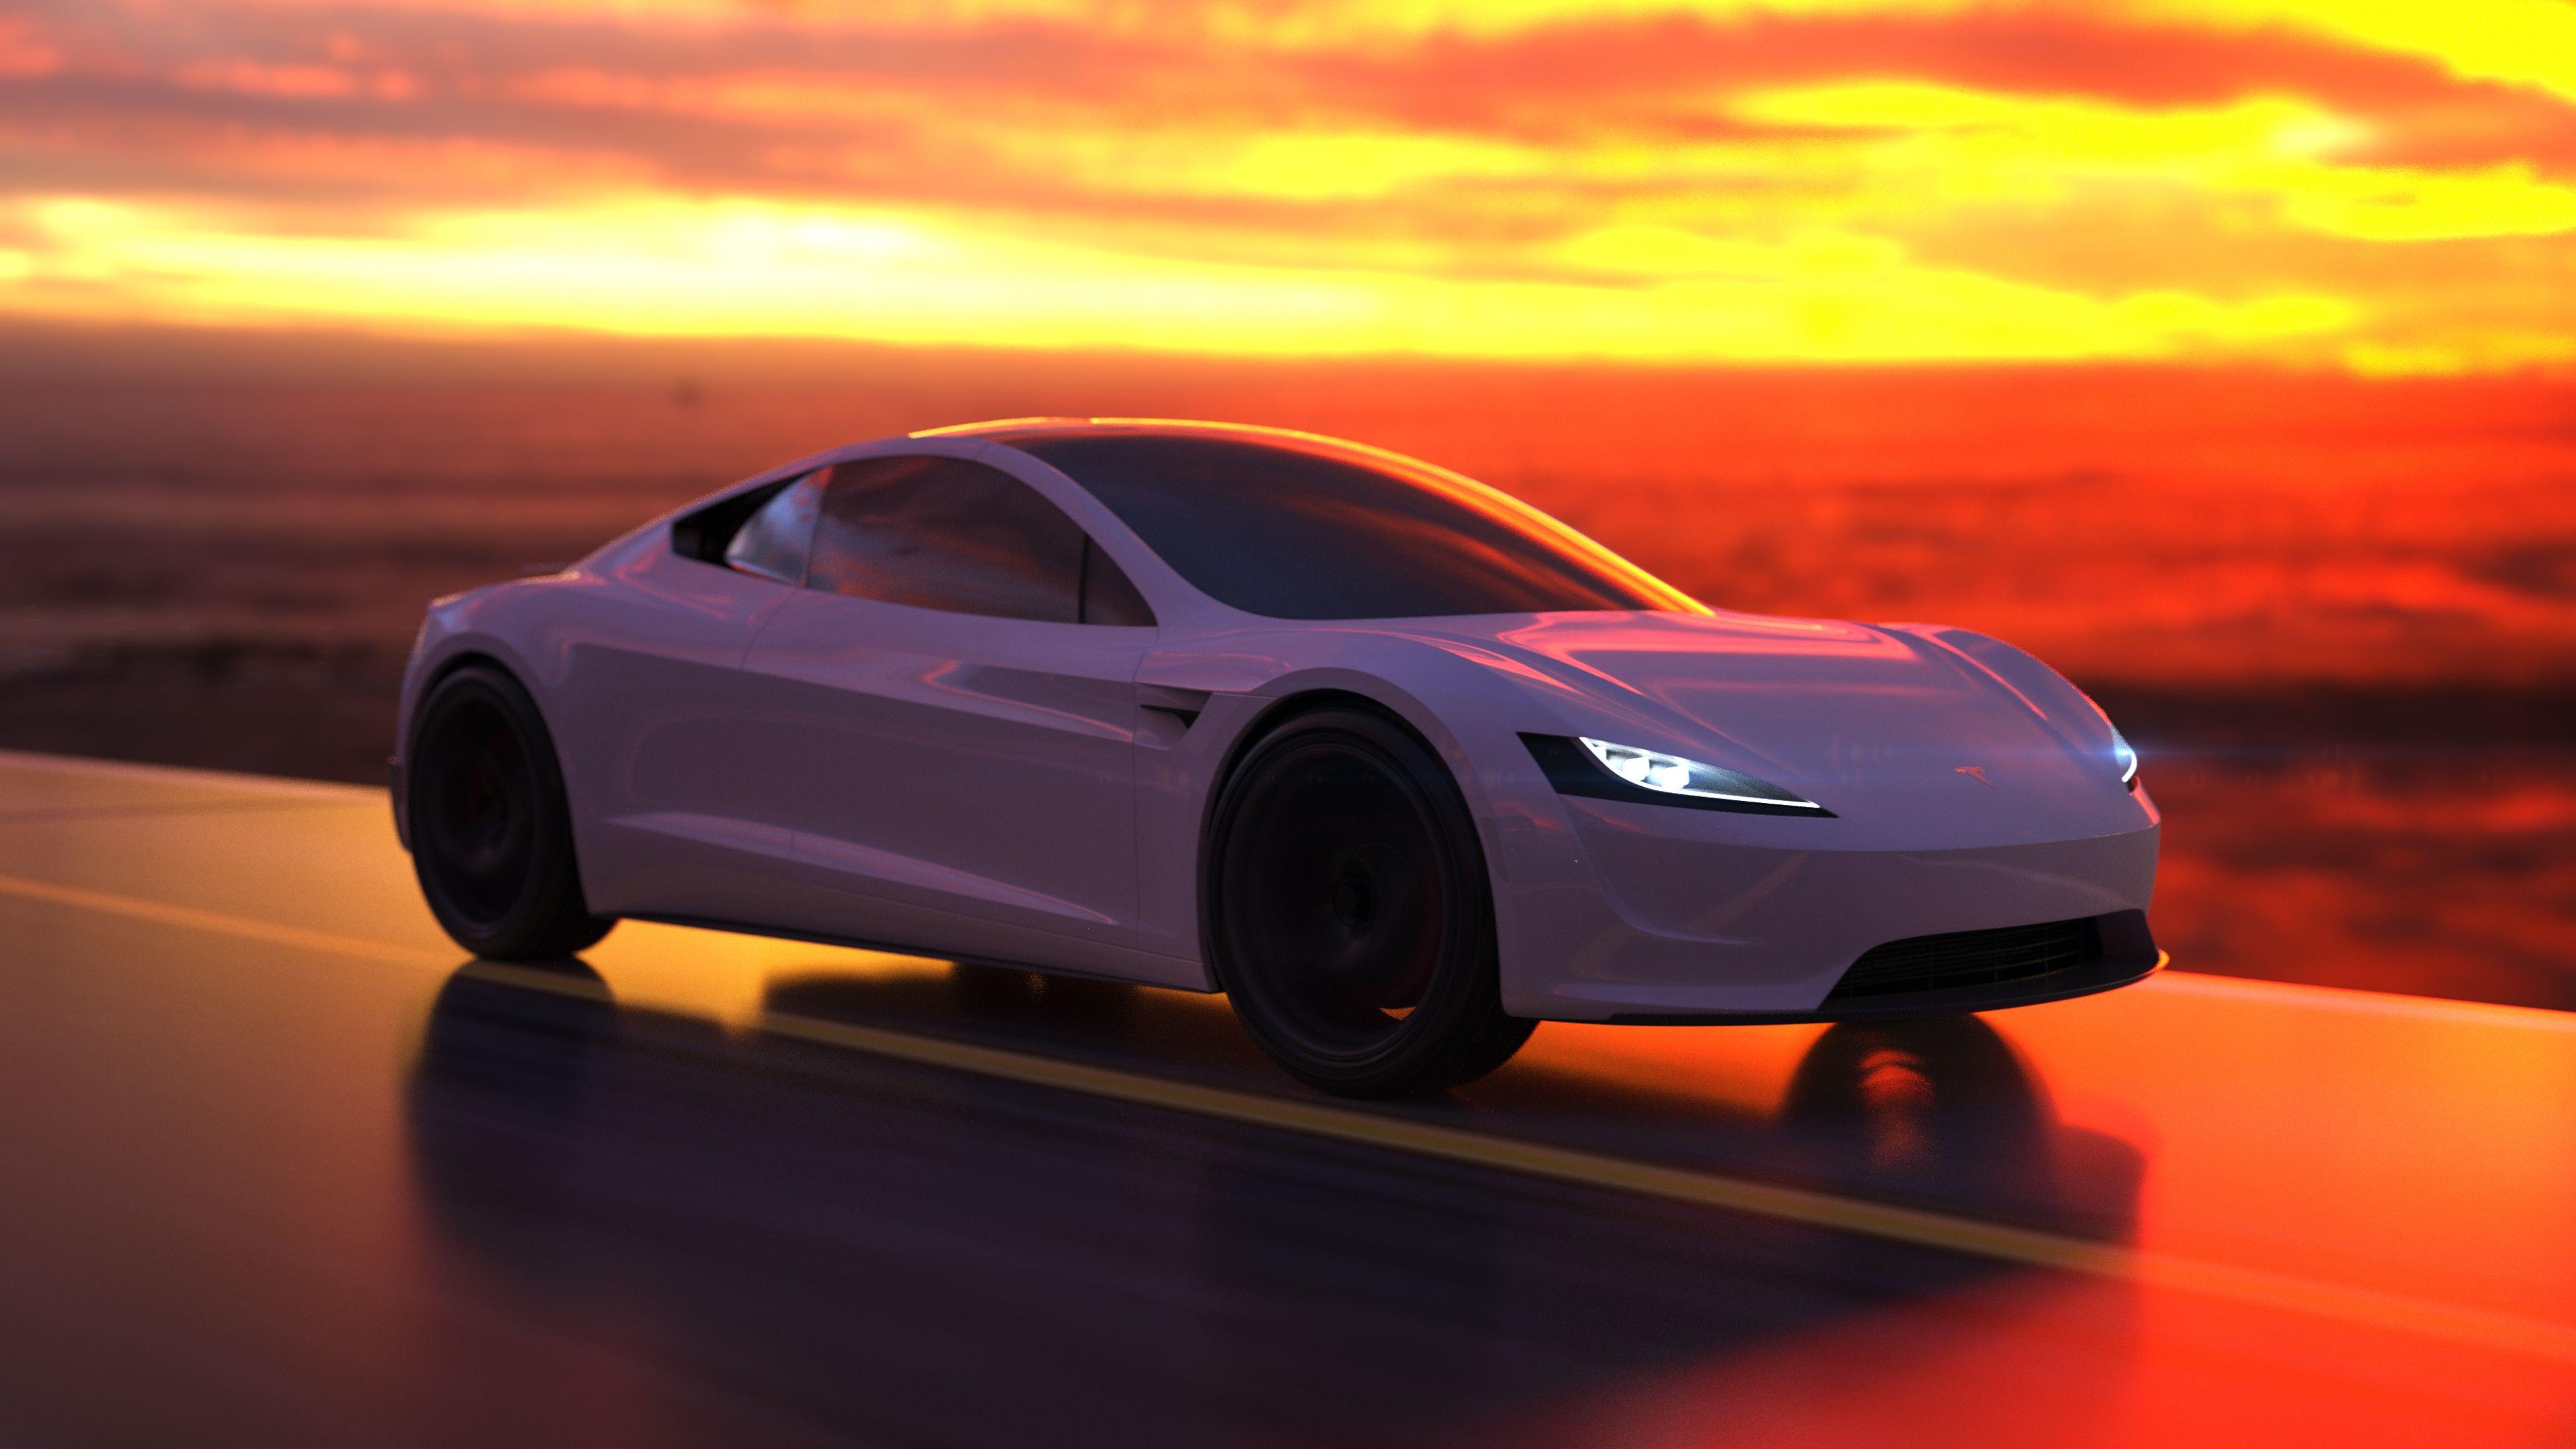 Tesla Roadster 4k Wallpapers Top Free Tesla Roadster 4k Backgrounds Wallpaperaccess